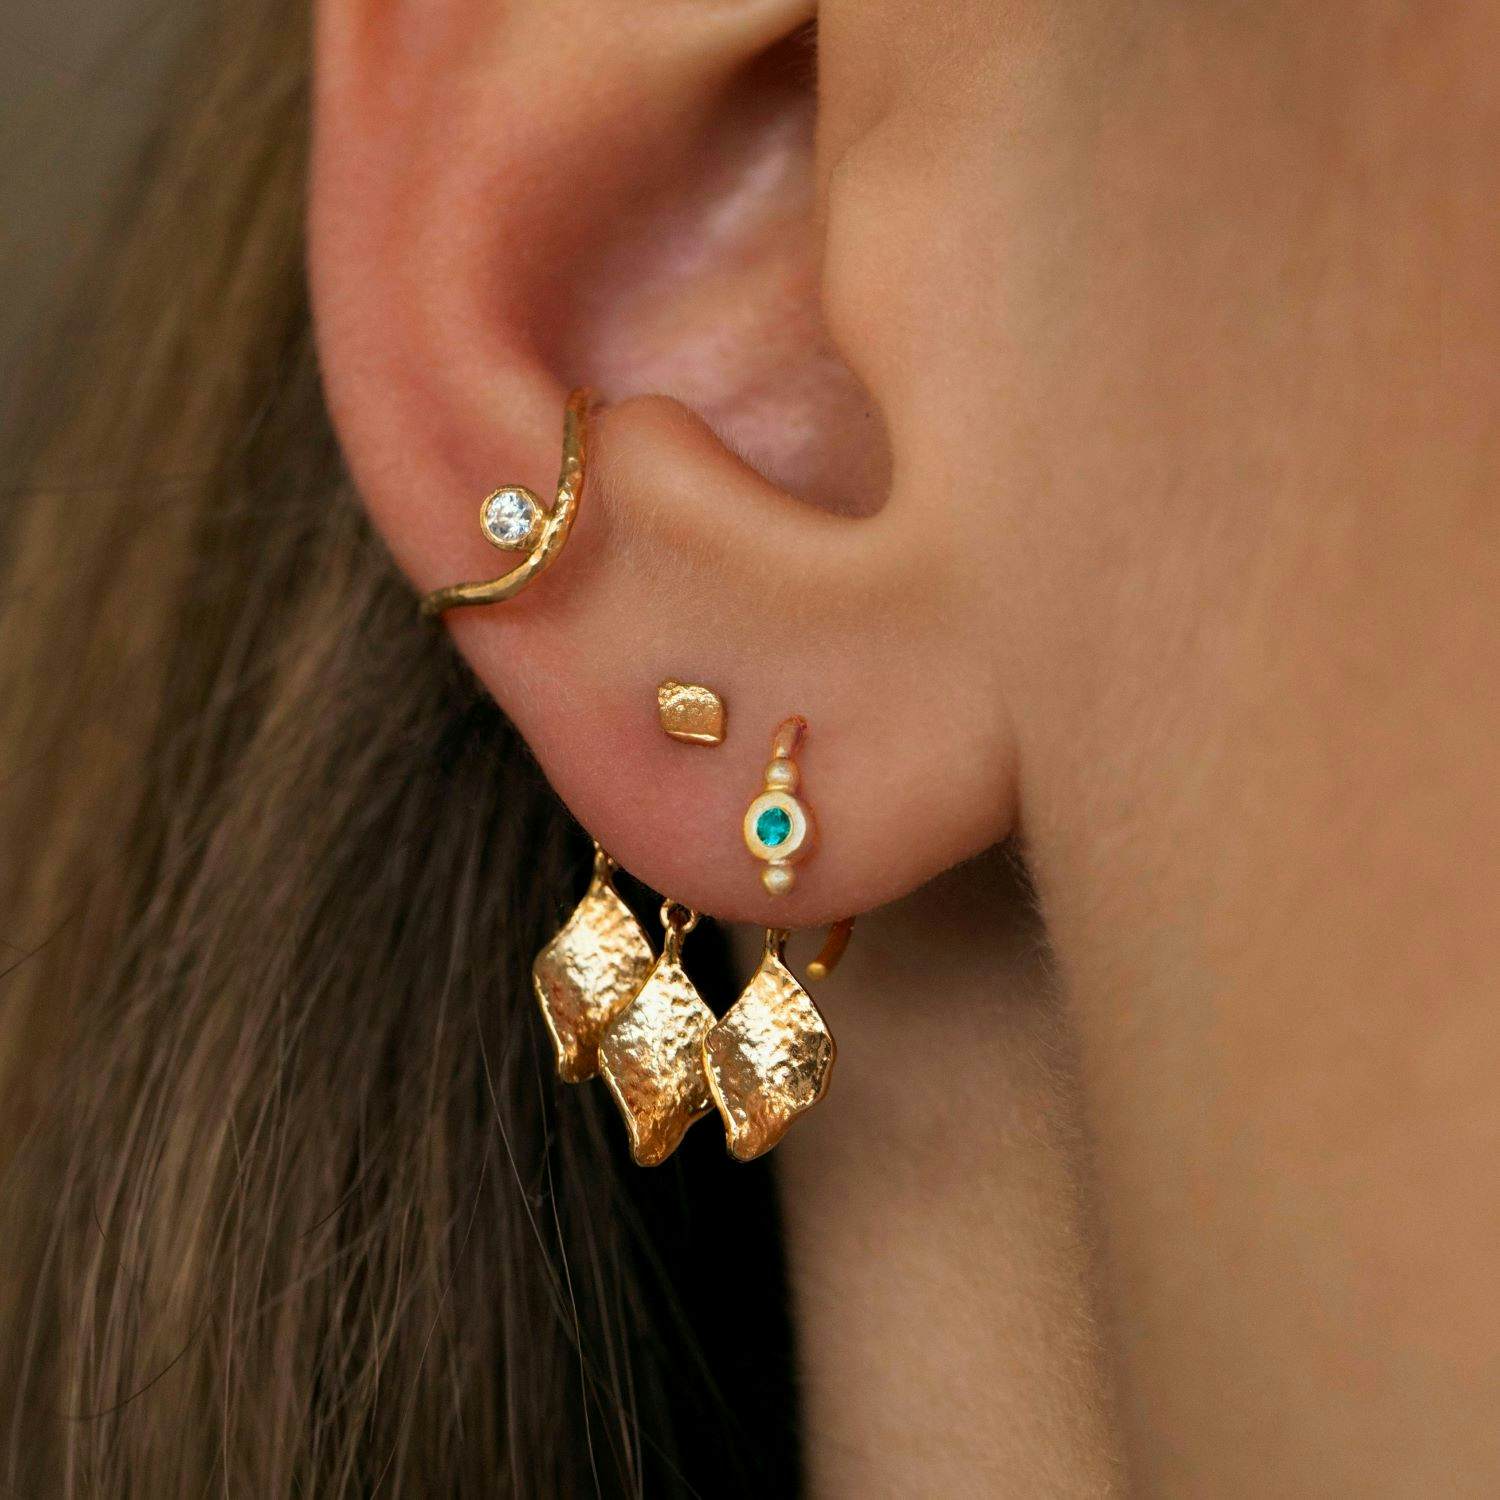 Wavy Ear Cuff With Stone von STINE A Jewelry in Vergoldet-Silber Sterling 925